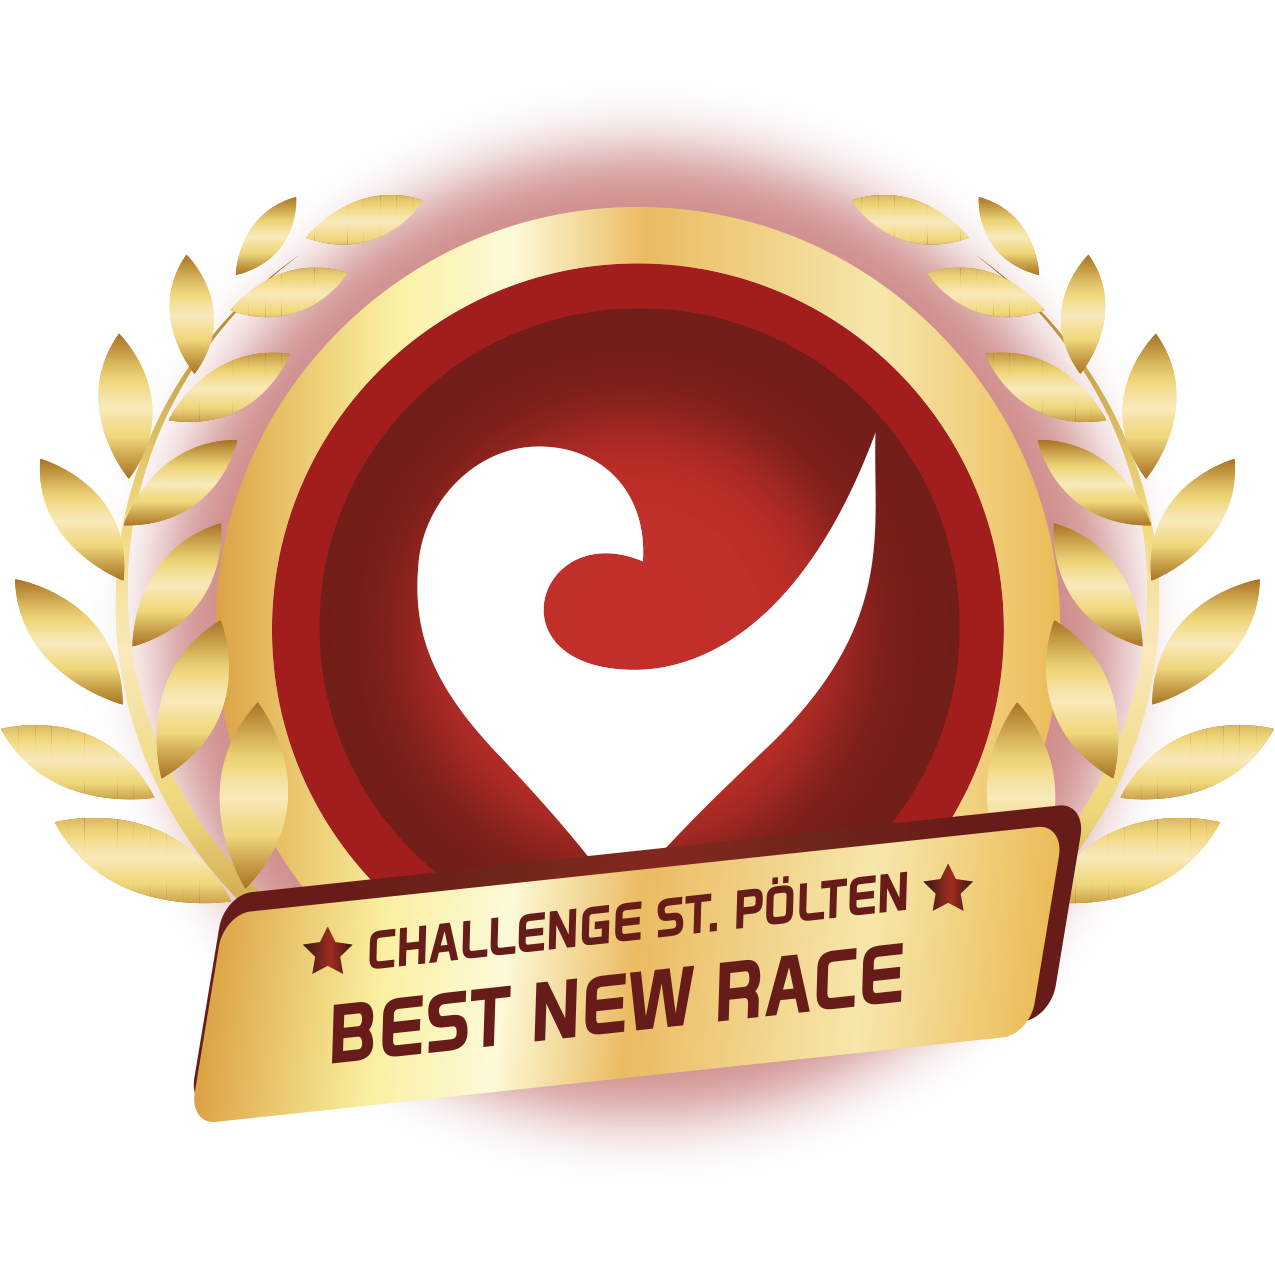 CHALLENGE FAMILY RACE AWARDS 2021 ANNOUNCED Challenge St. Pölten